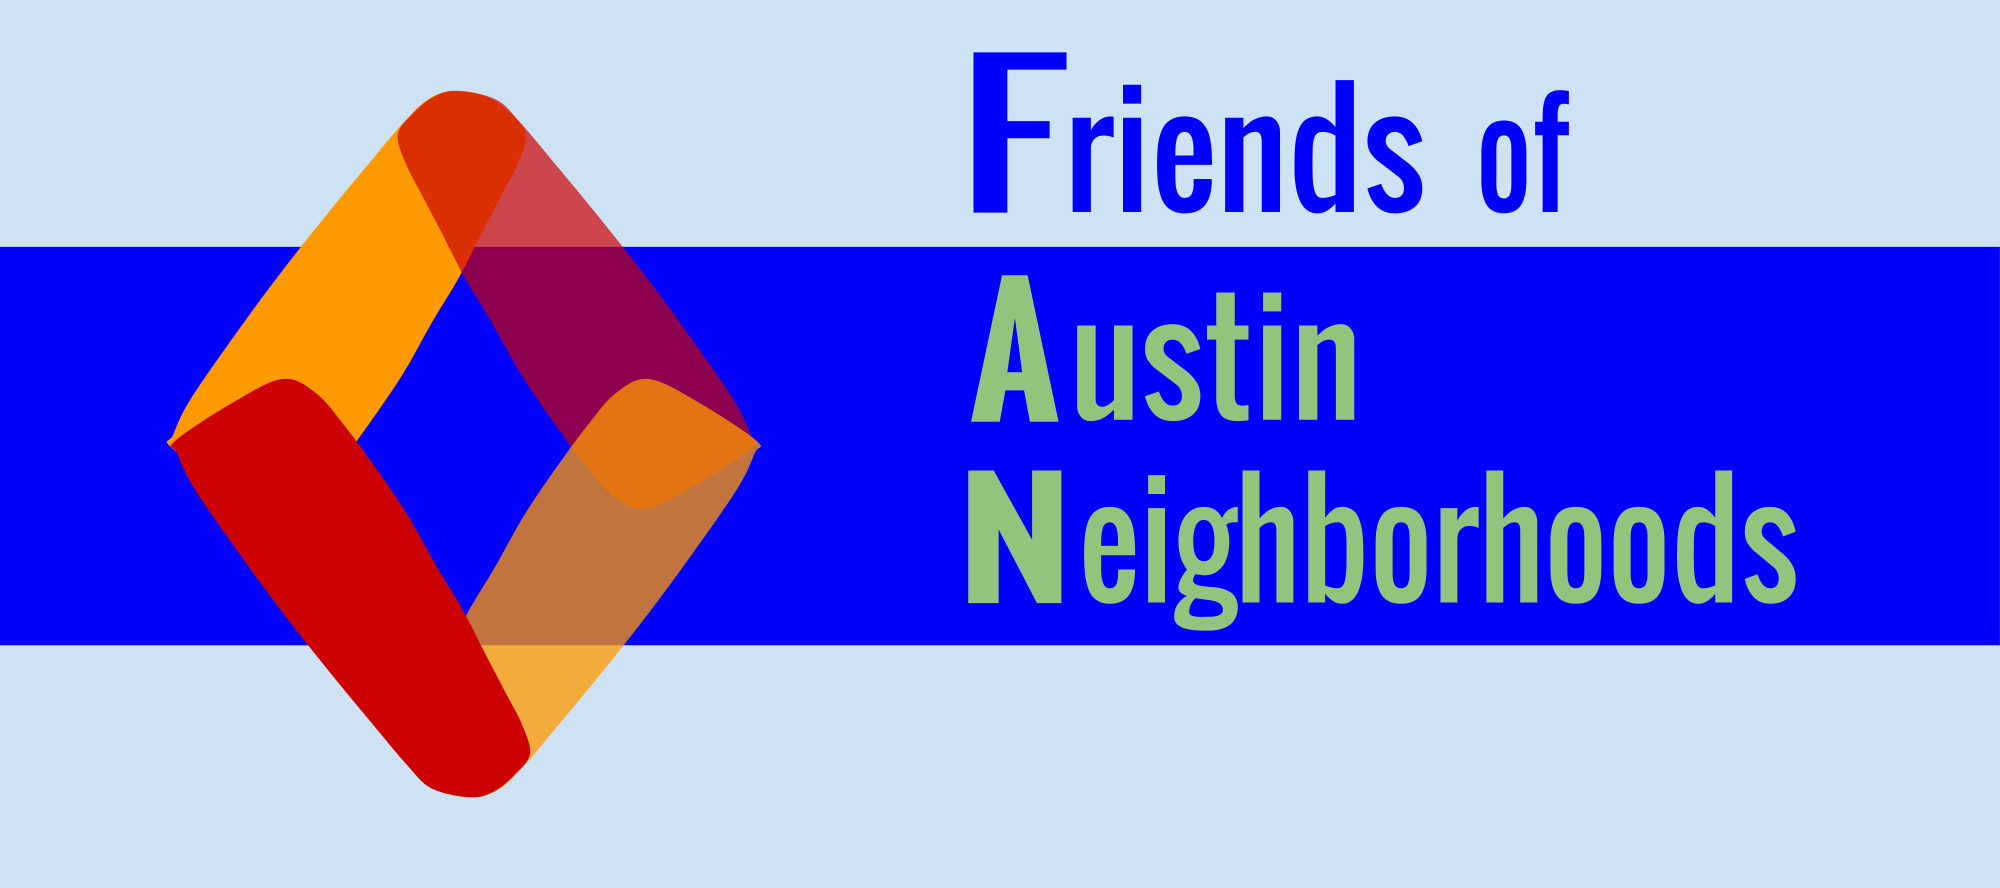 Friends of Austin Neighborhoods